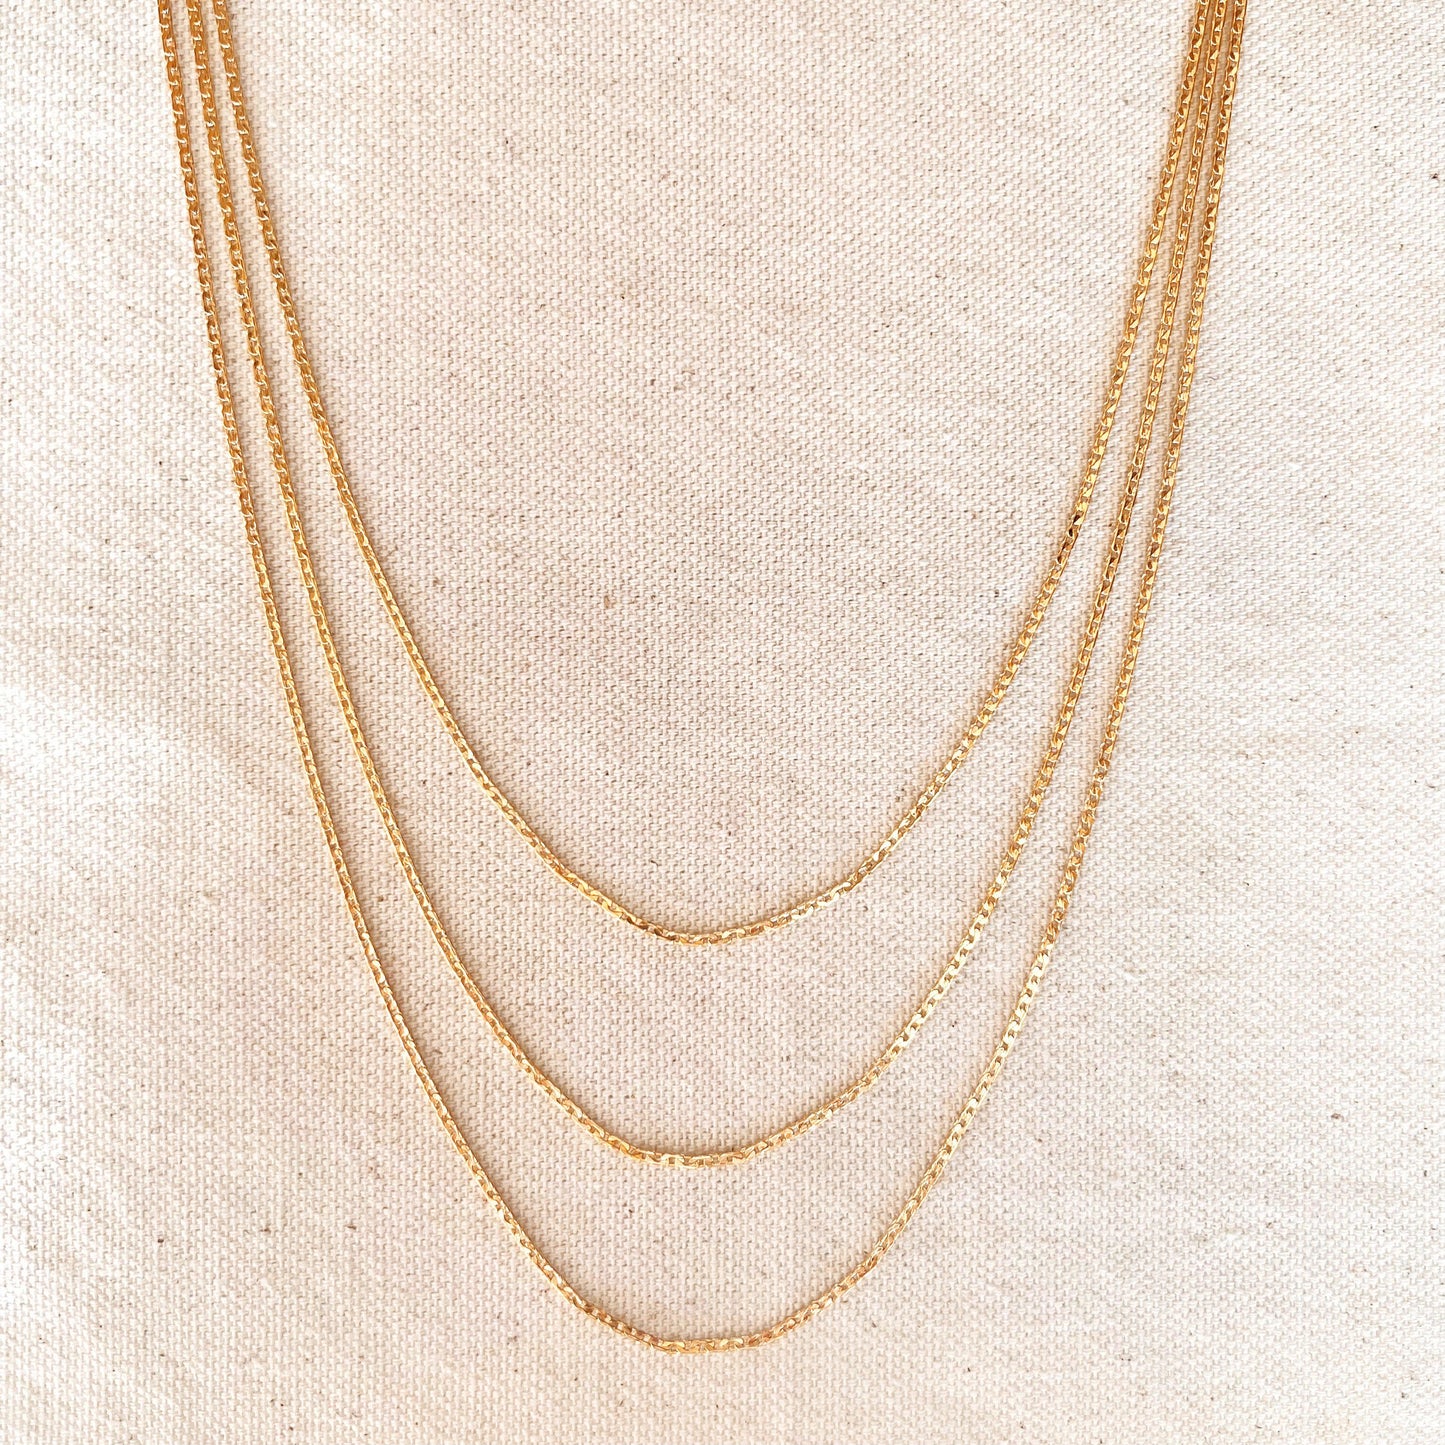 GoldFi 18k Gold Filled Laminated Mariner Chain